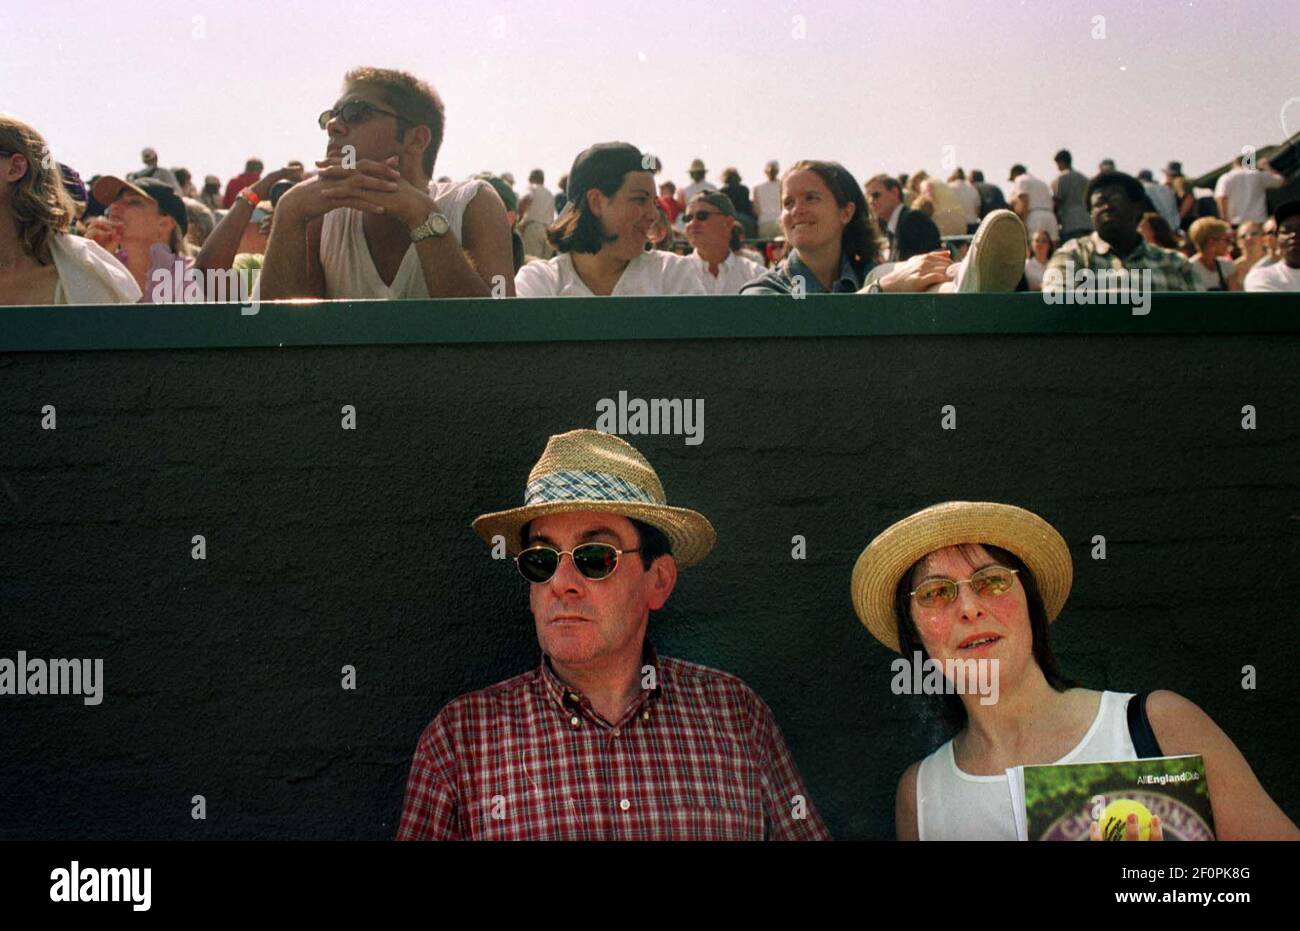 WIMBLEDON TENNIS CHAMPIONSHIPS JUNE 2001WATCHING TENNIS AT THE OPENING DAY OF WIMBLEDON Stock Photo